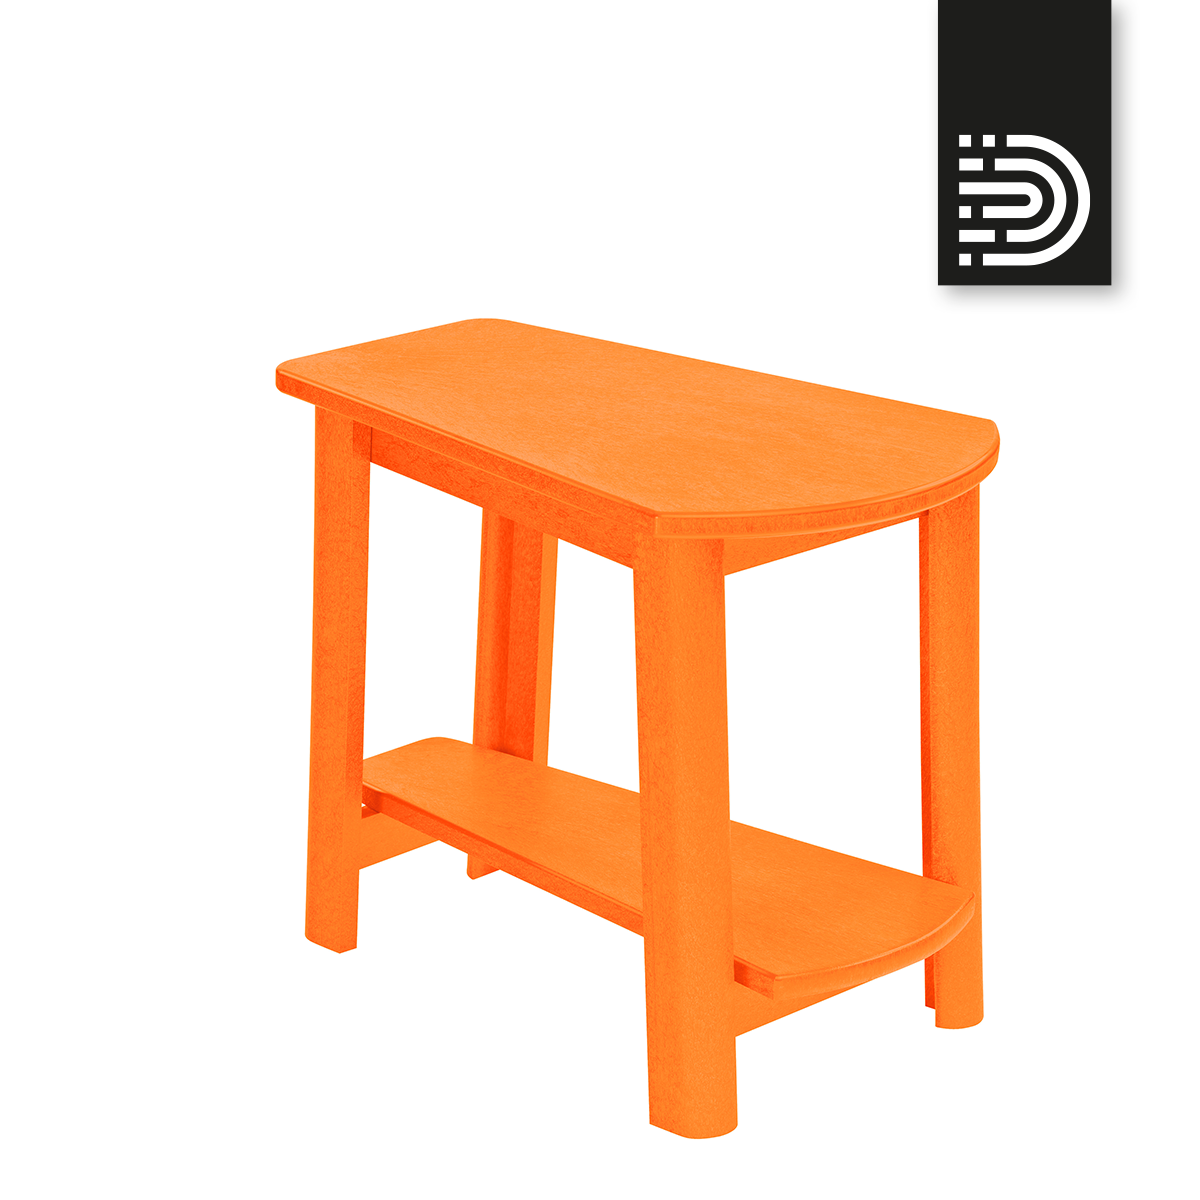 T04 Addy Side Table - Orange 13